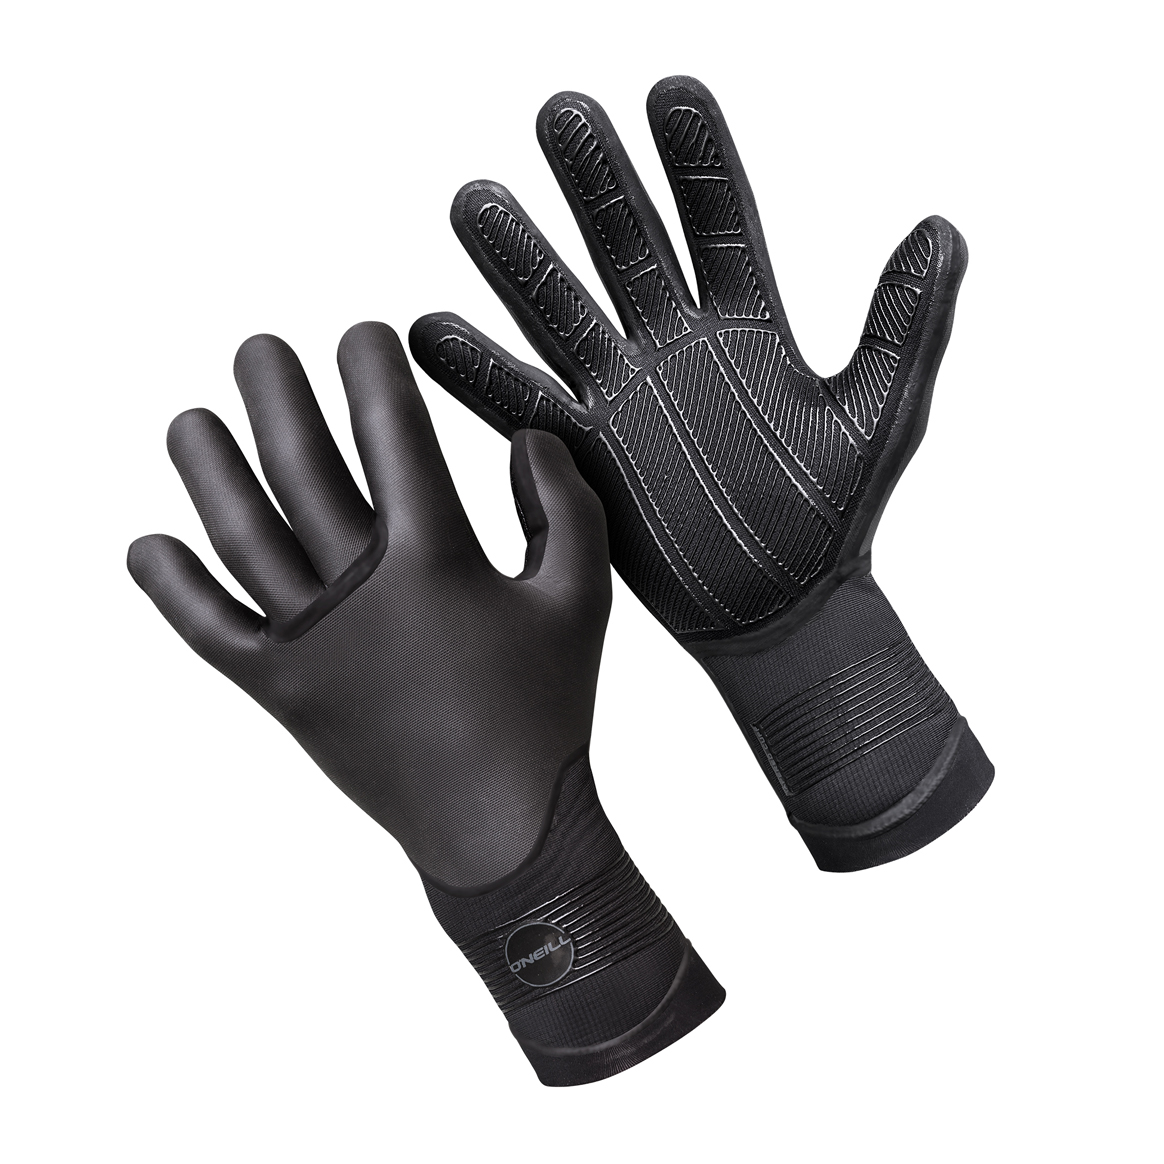 O'Neill PsychoTech 5mm neoprene gloves